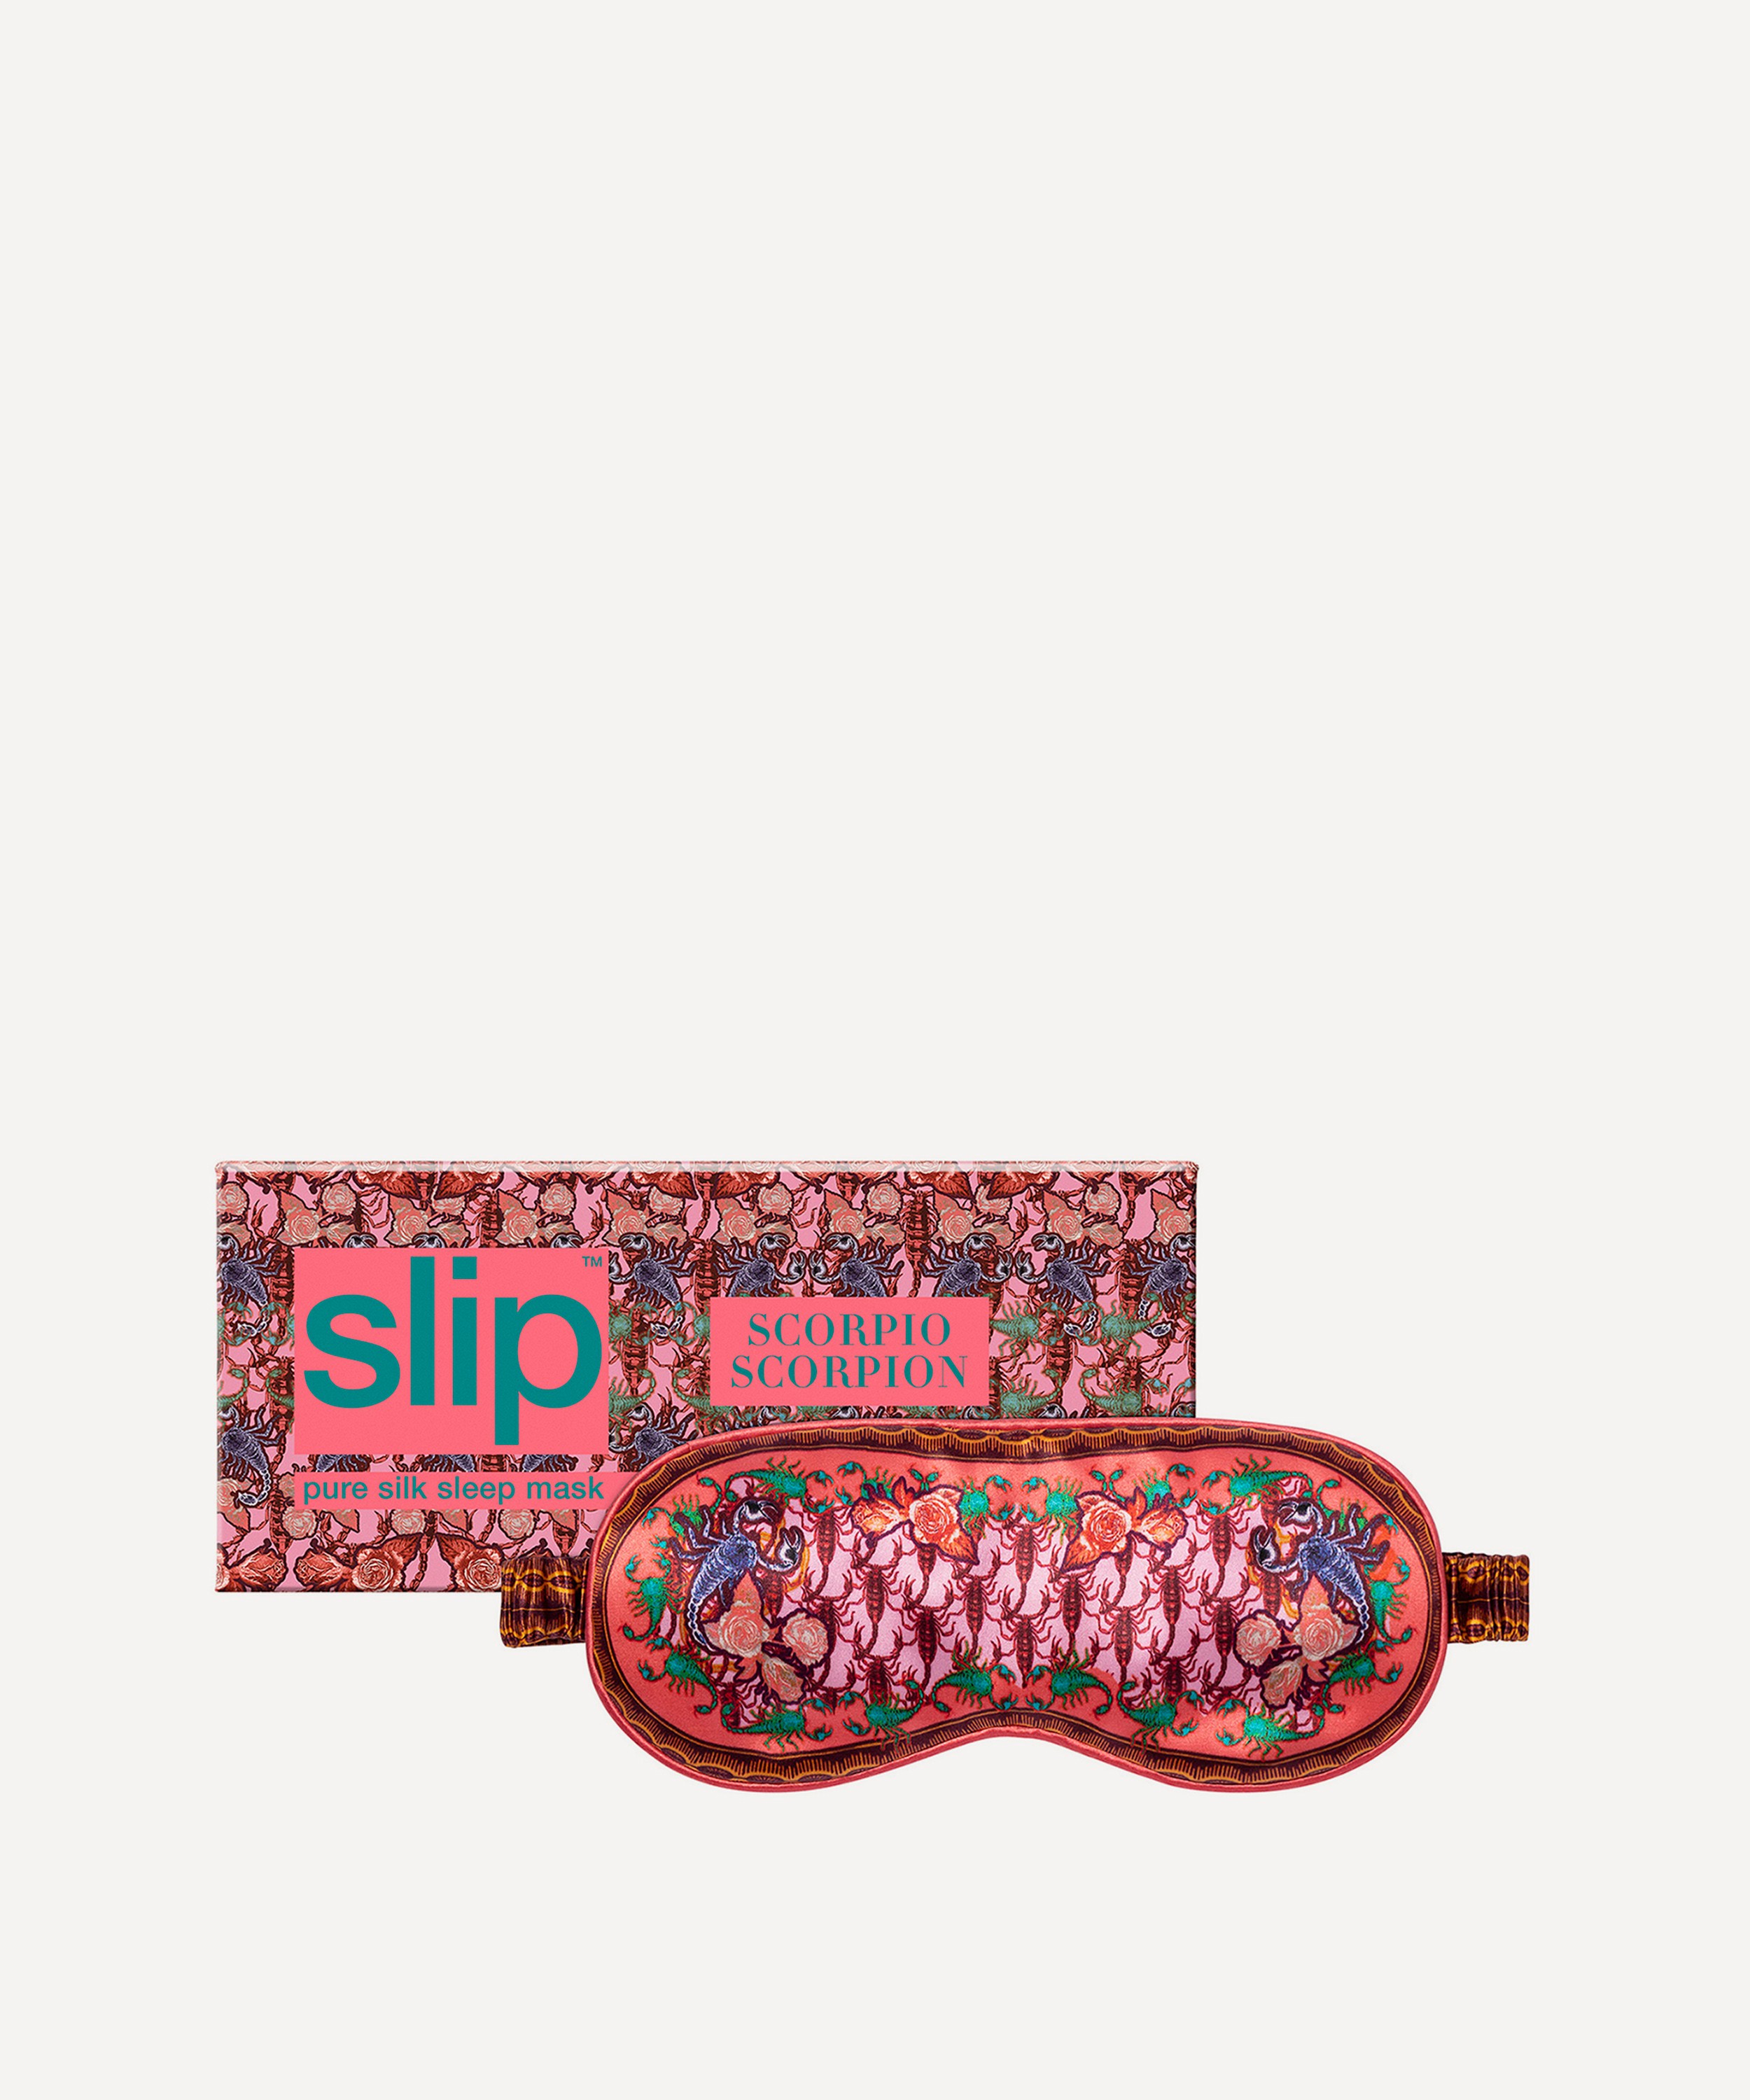 Slip - Scorpio Silk Sleep Mask image number 0